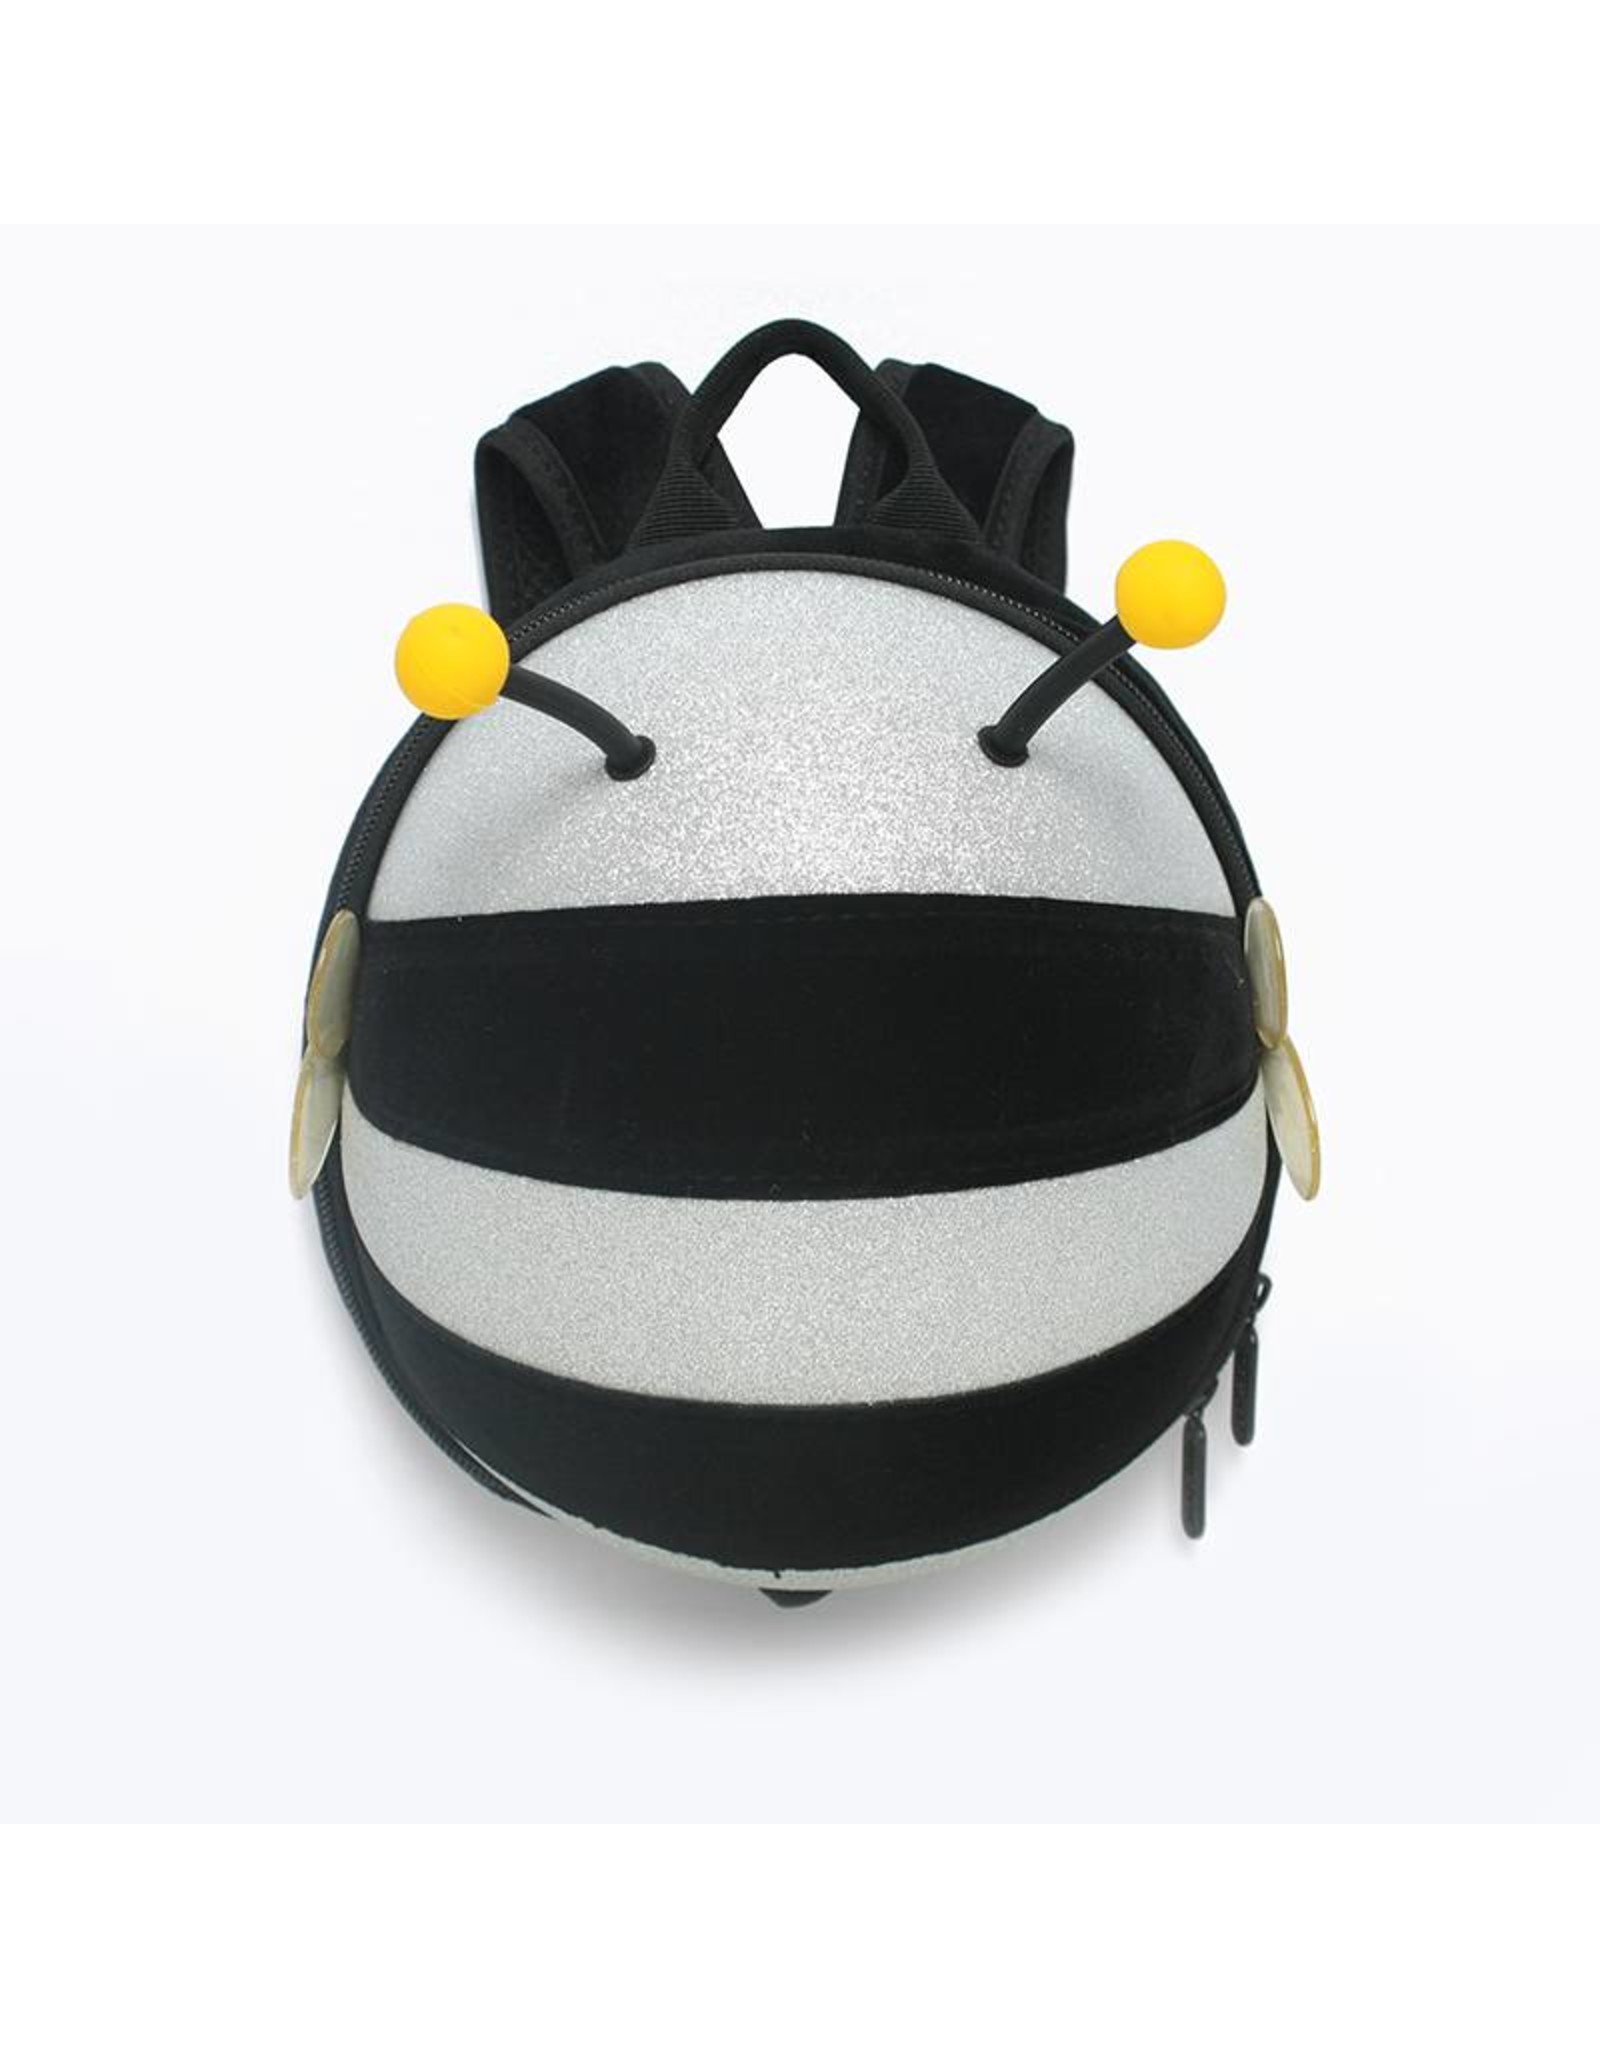 Childerns backpack Bee (Silver-Glitter)